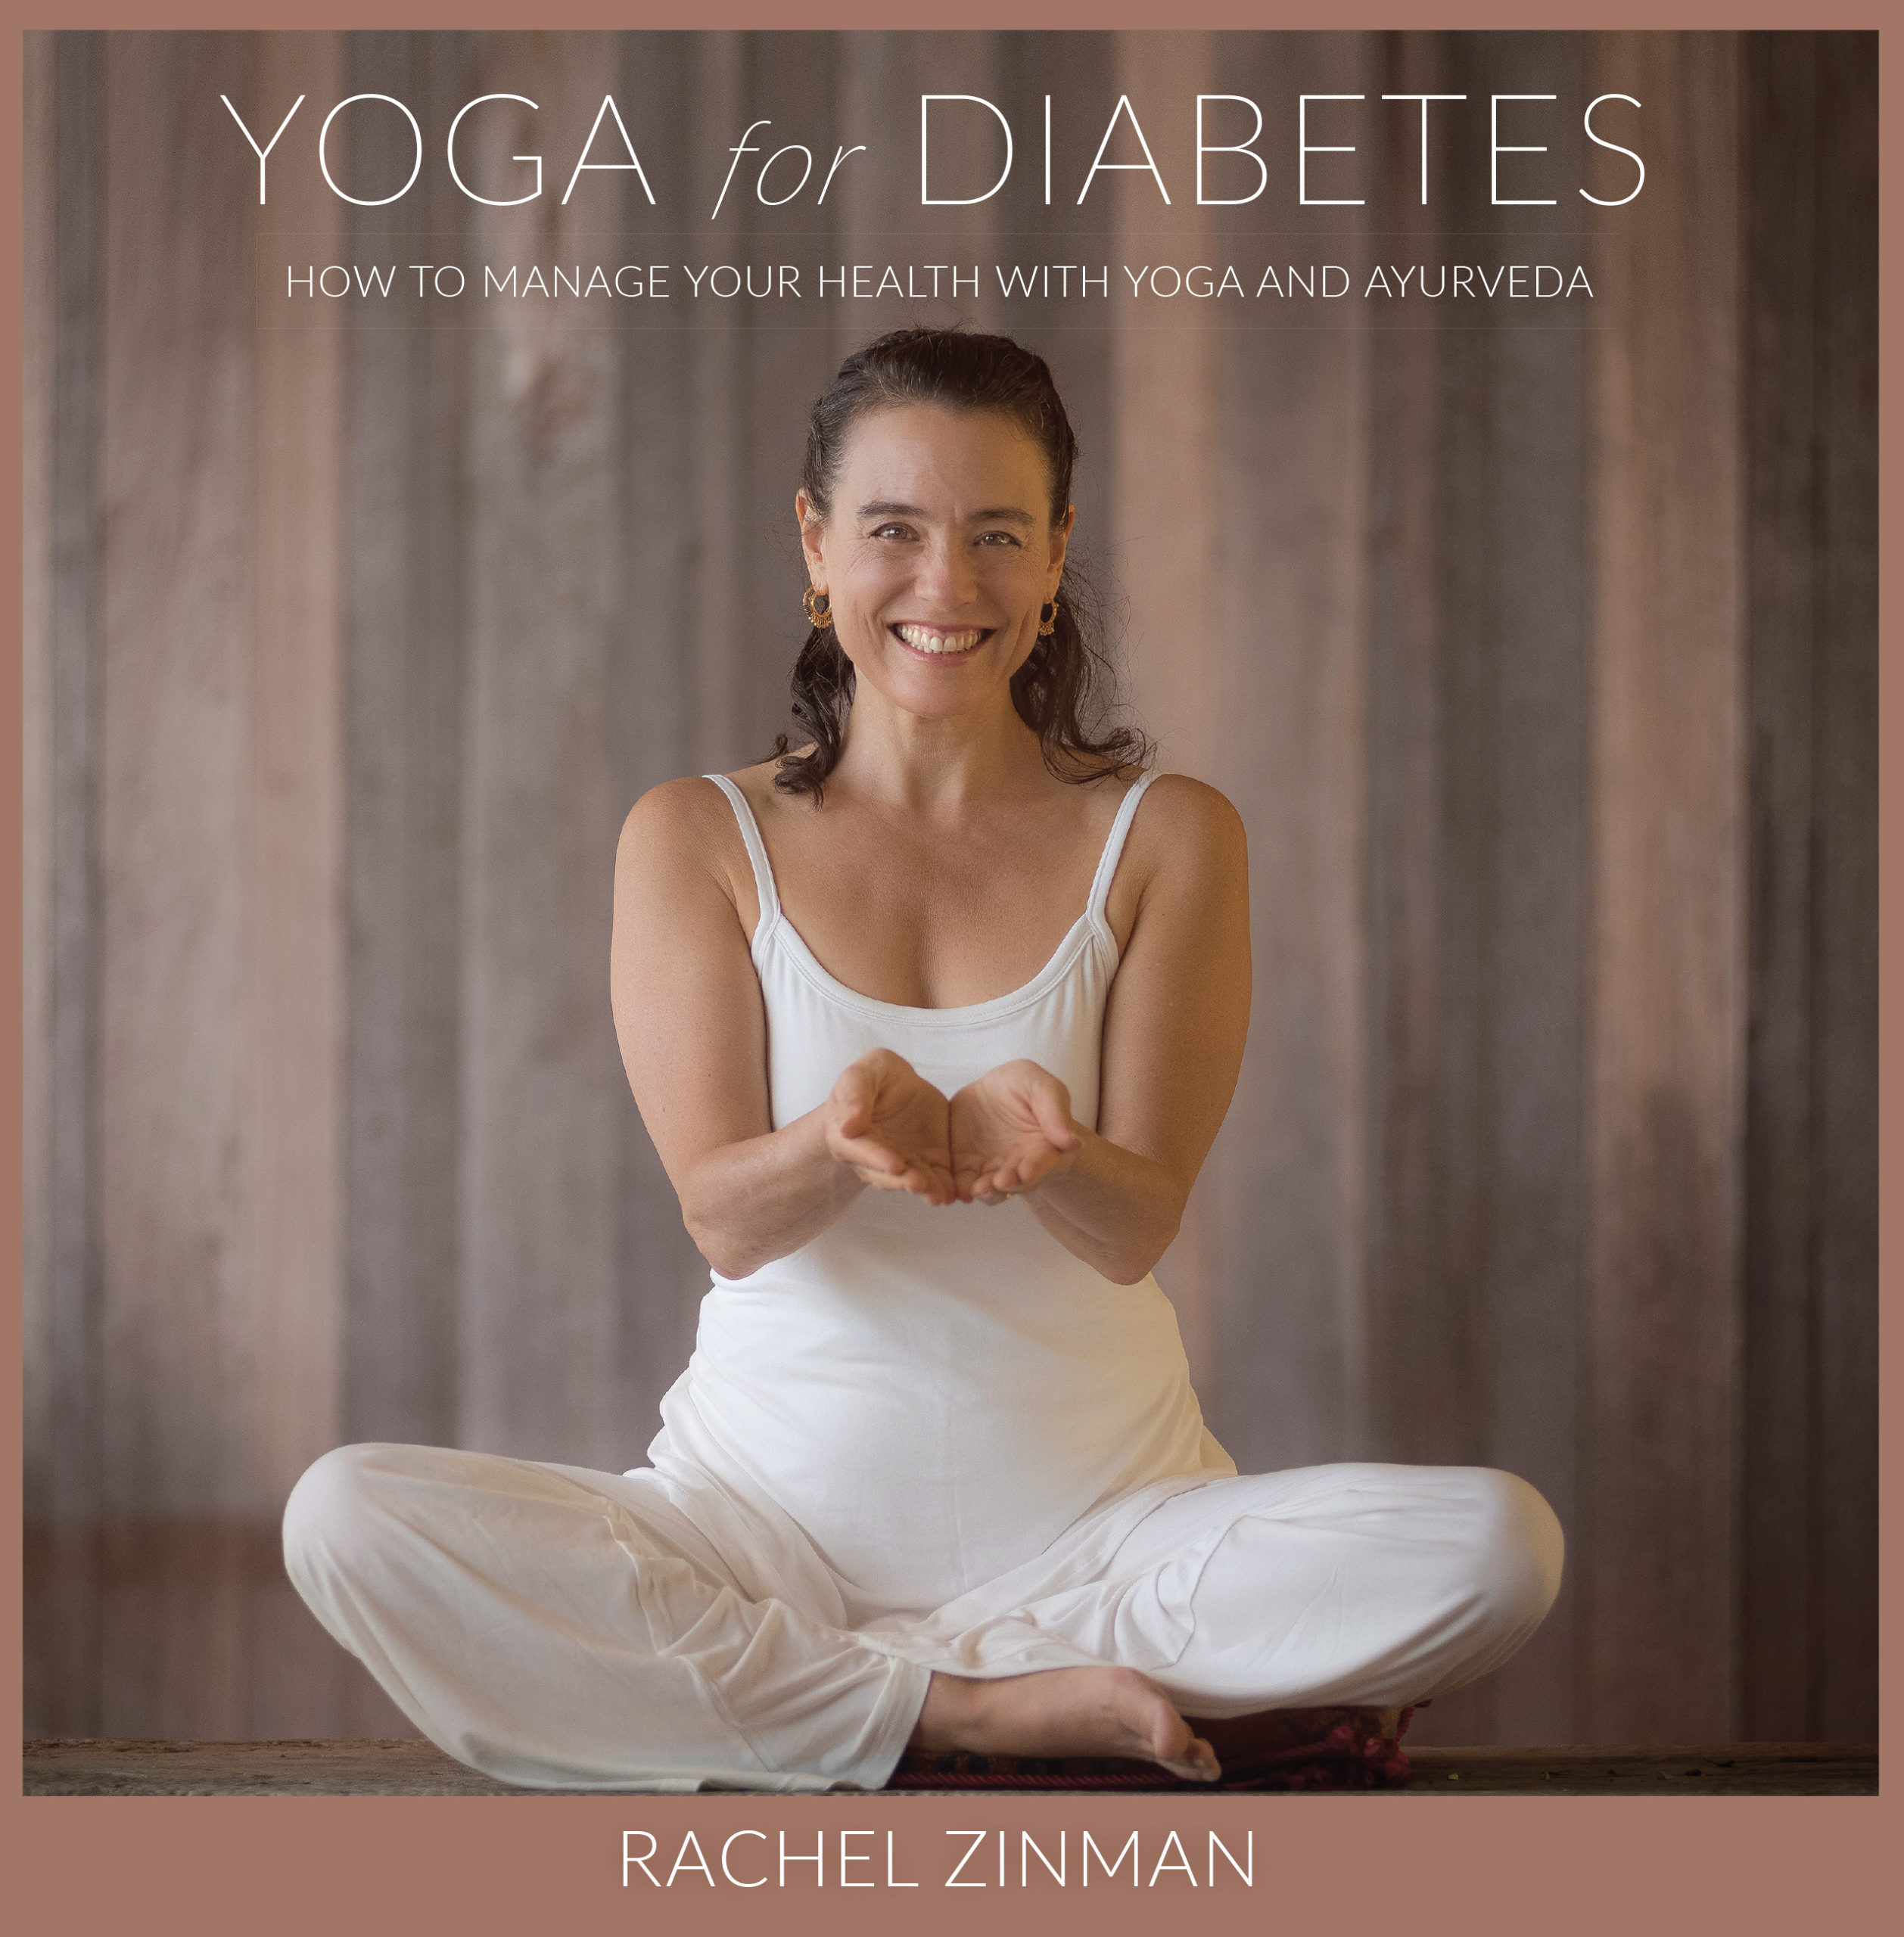 Book Review: Yoga for Diabetes by Rachel Zinman